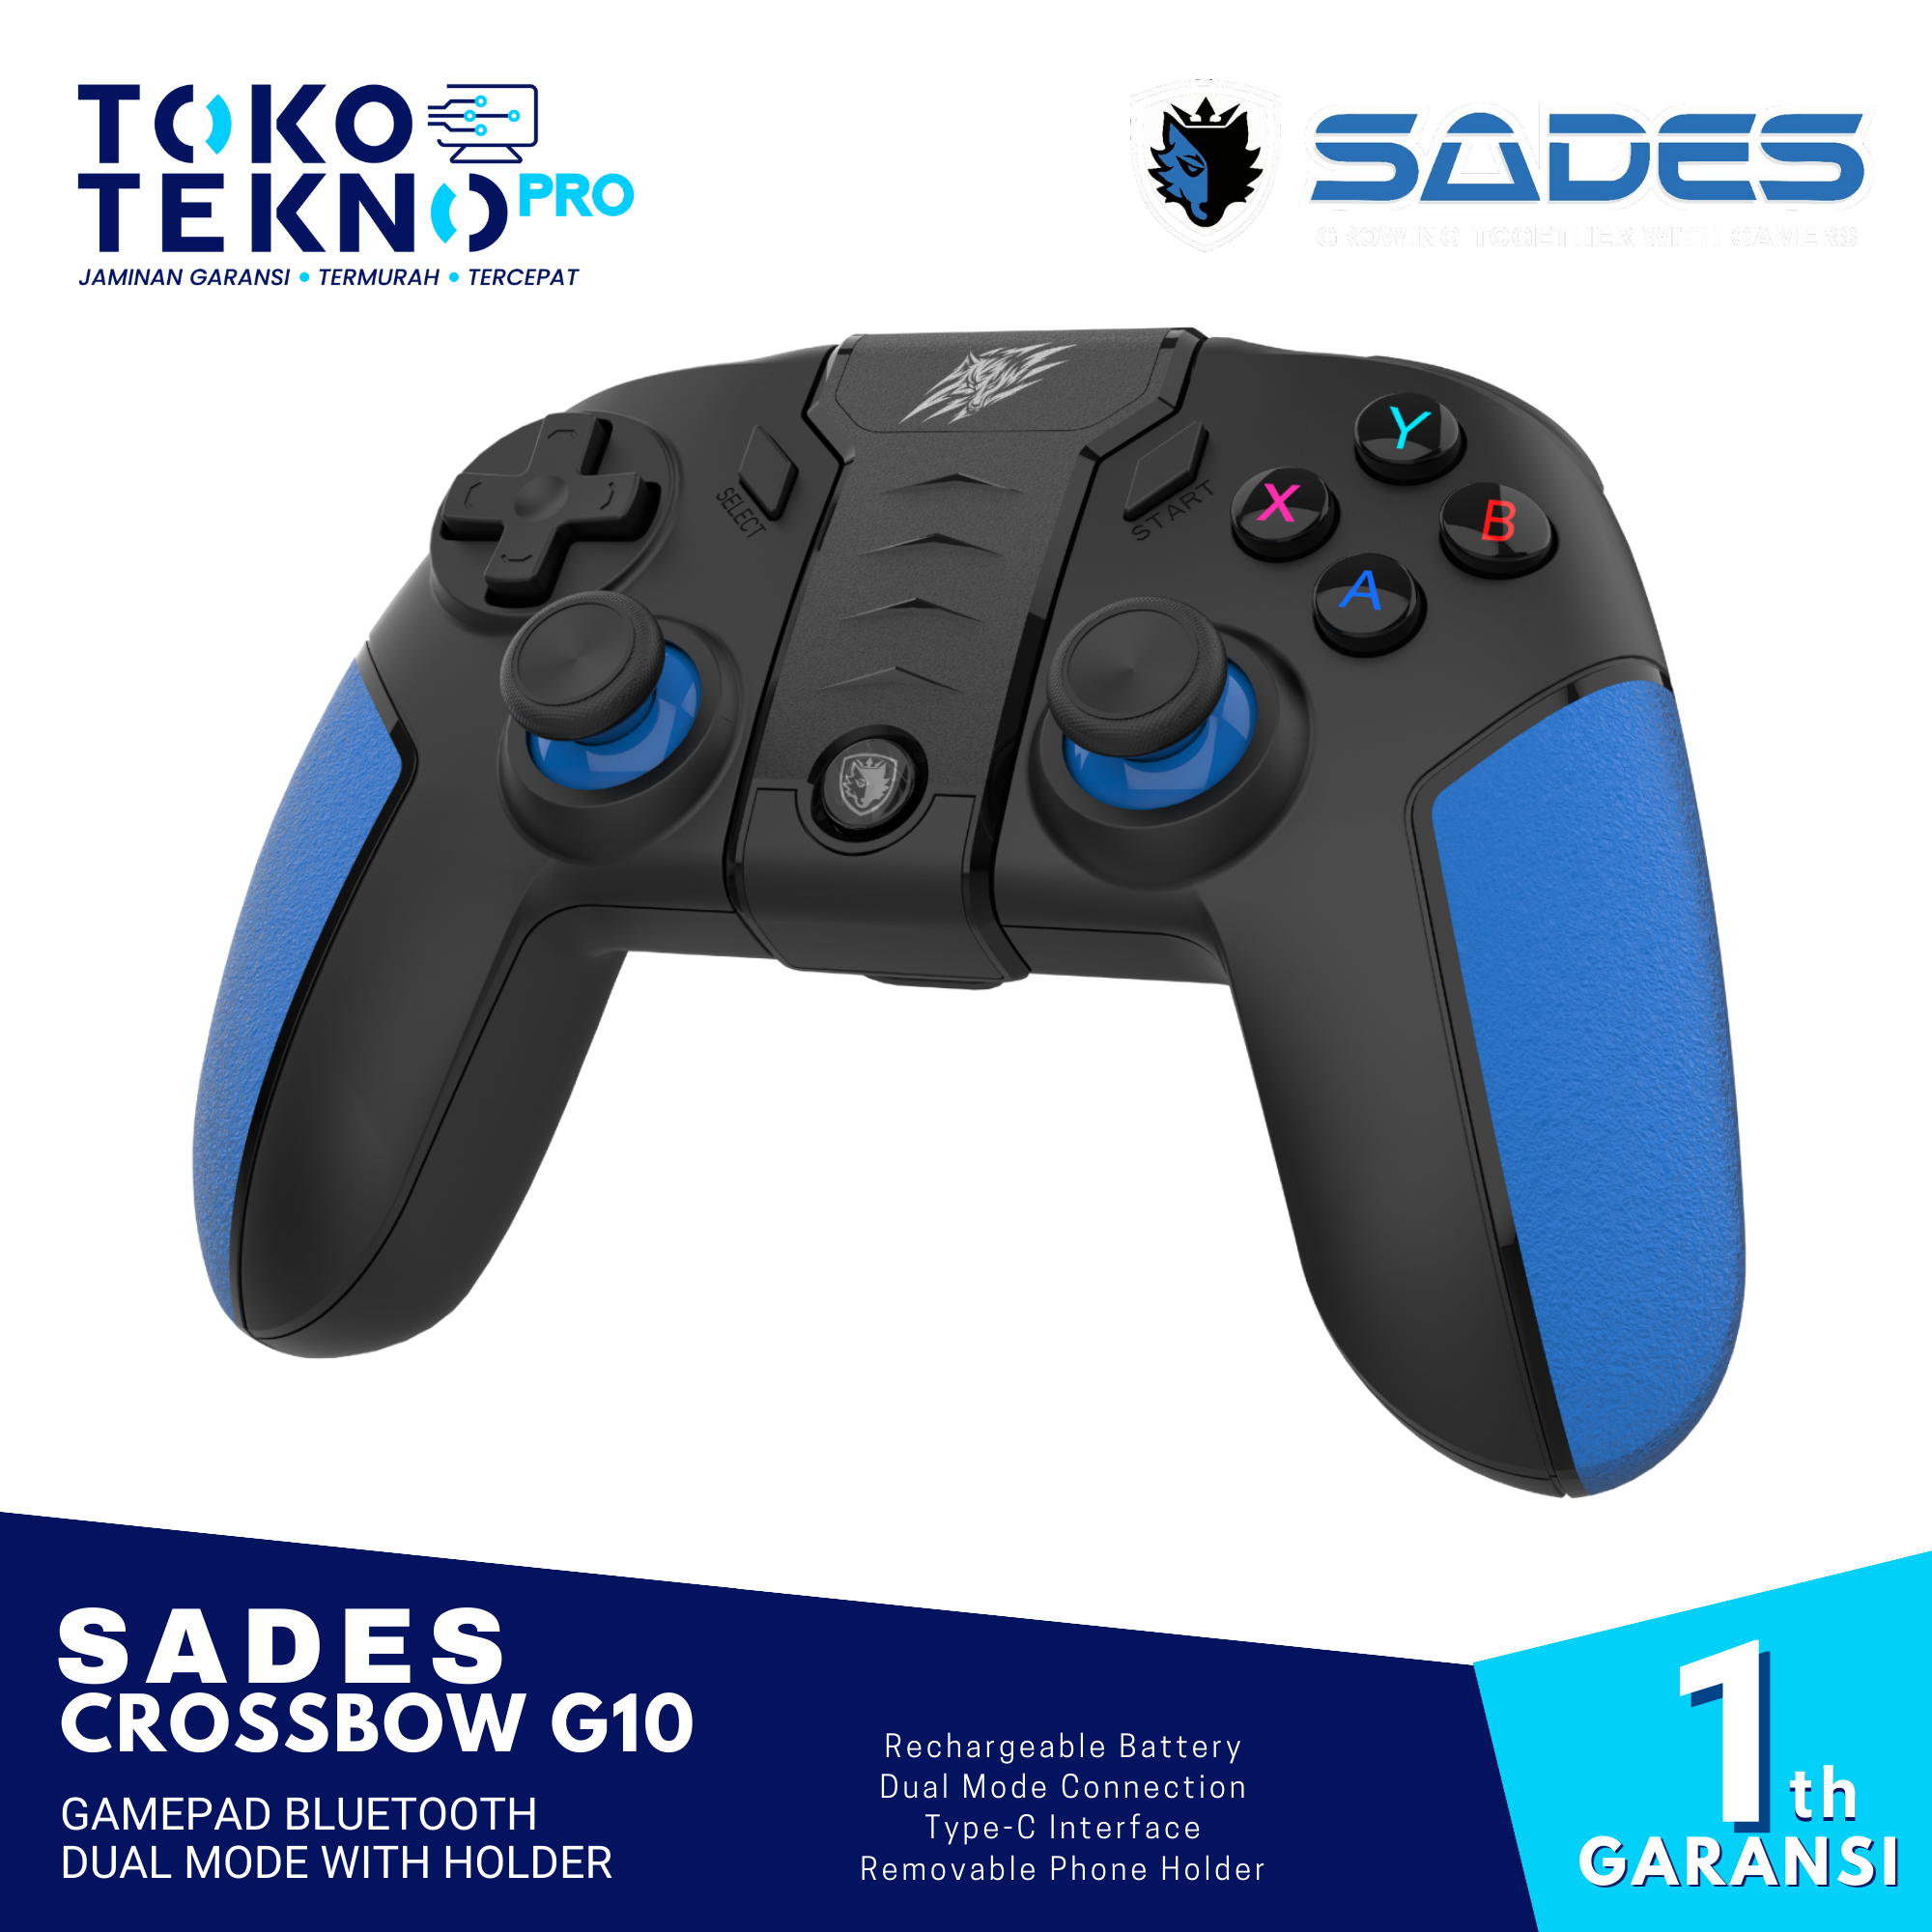 Sades Crossbow G10 Gamepad Bluetooth Dual Mode with Holder